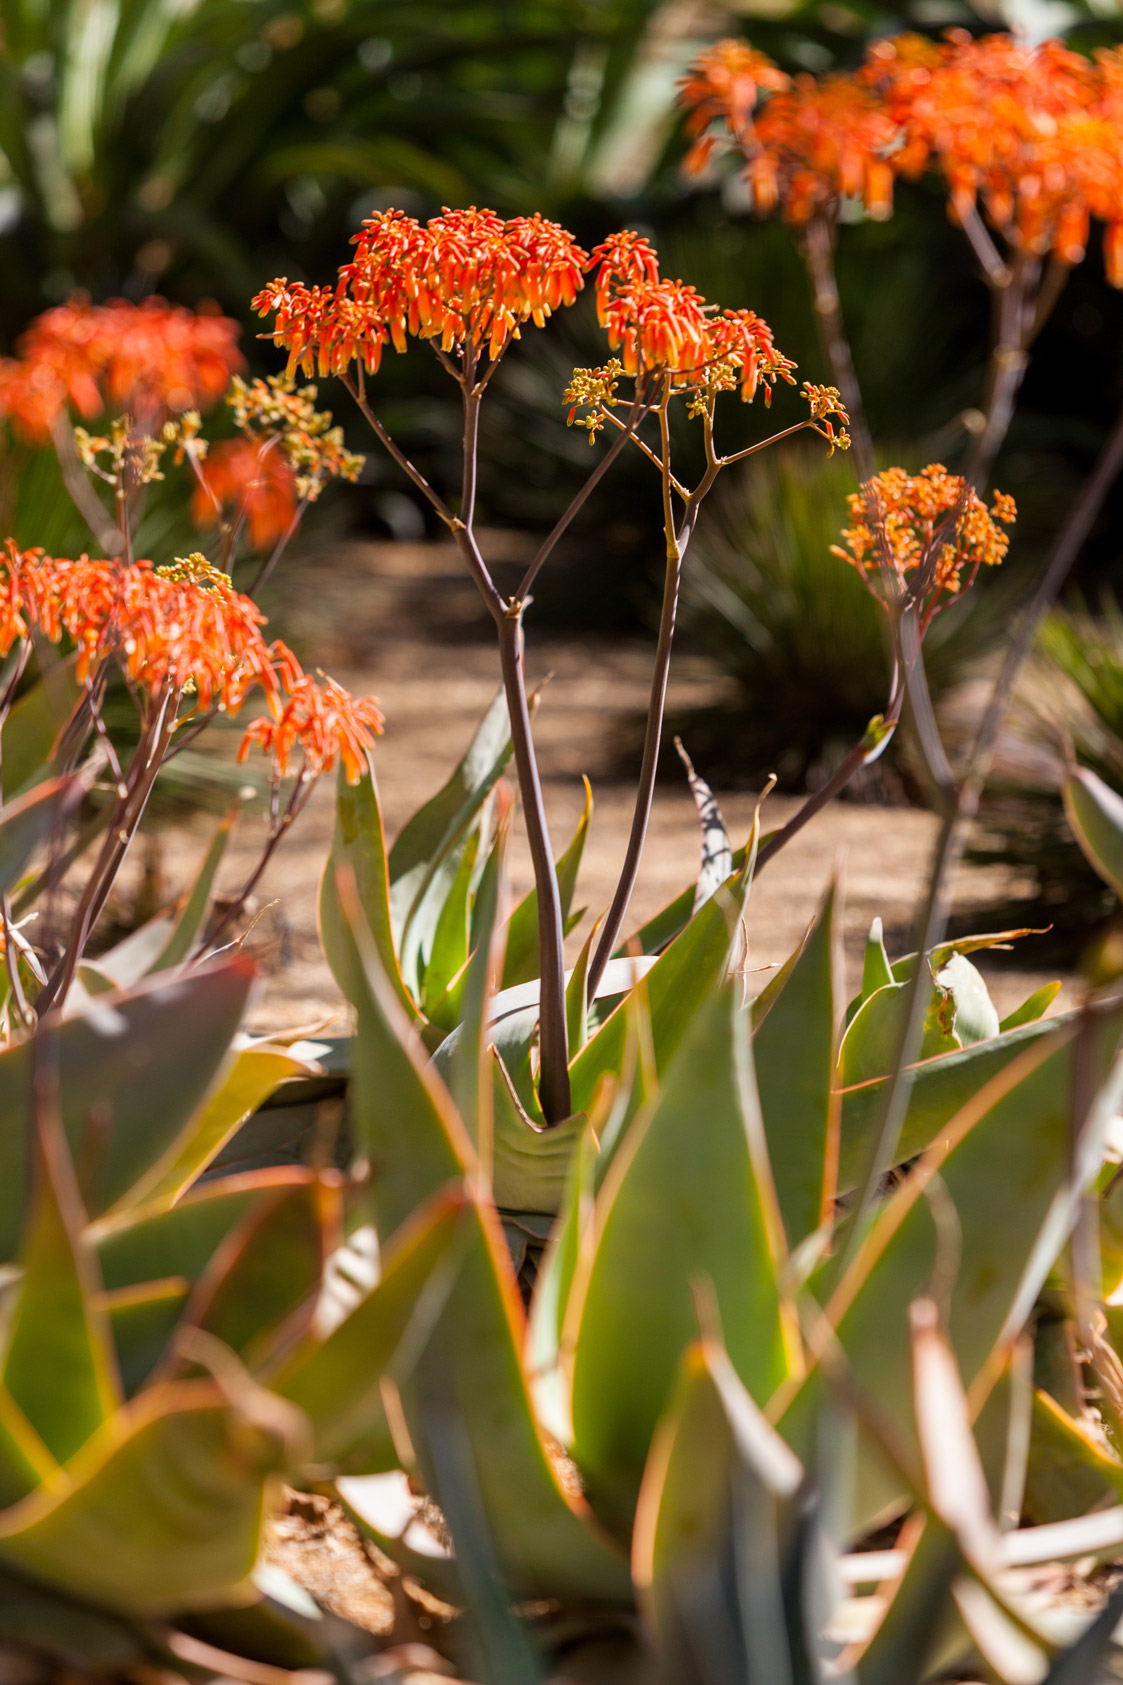 A singular flowering Coral Aloe.